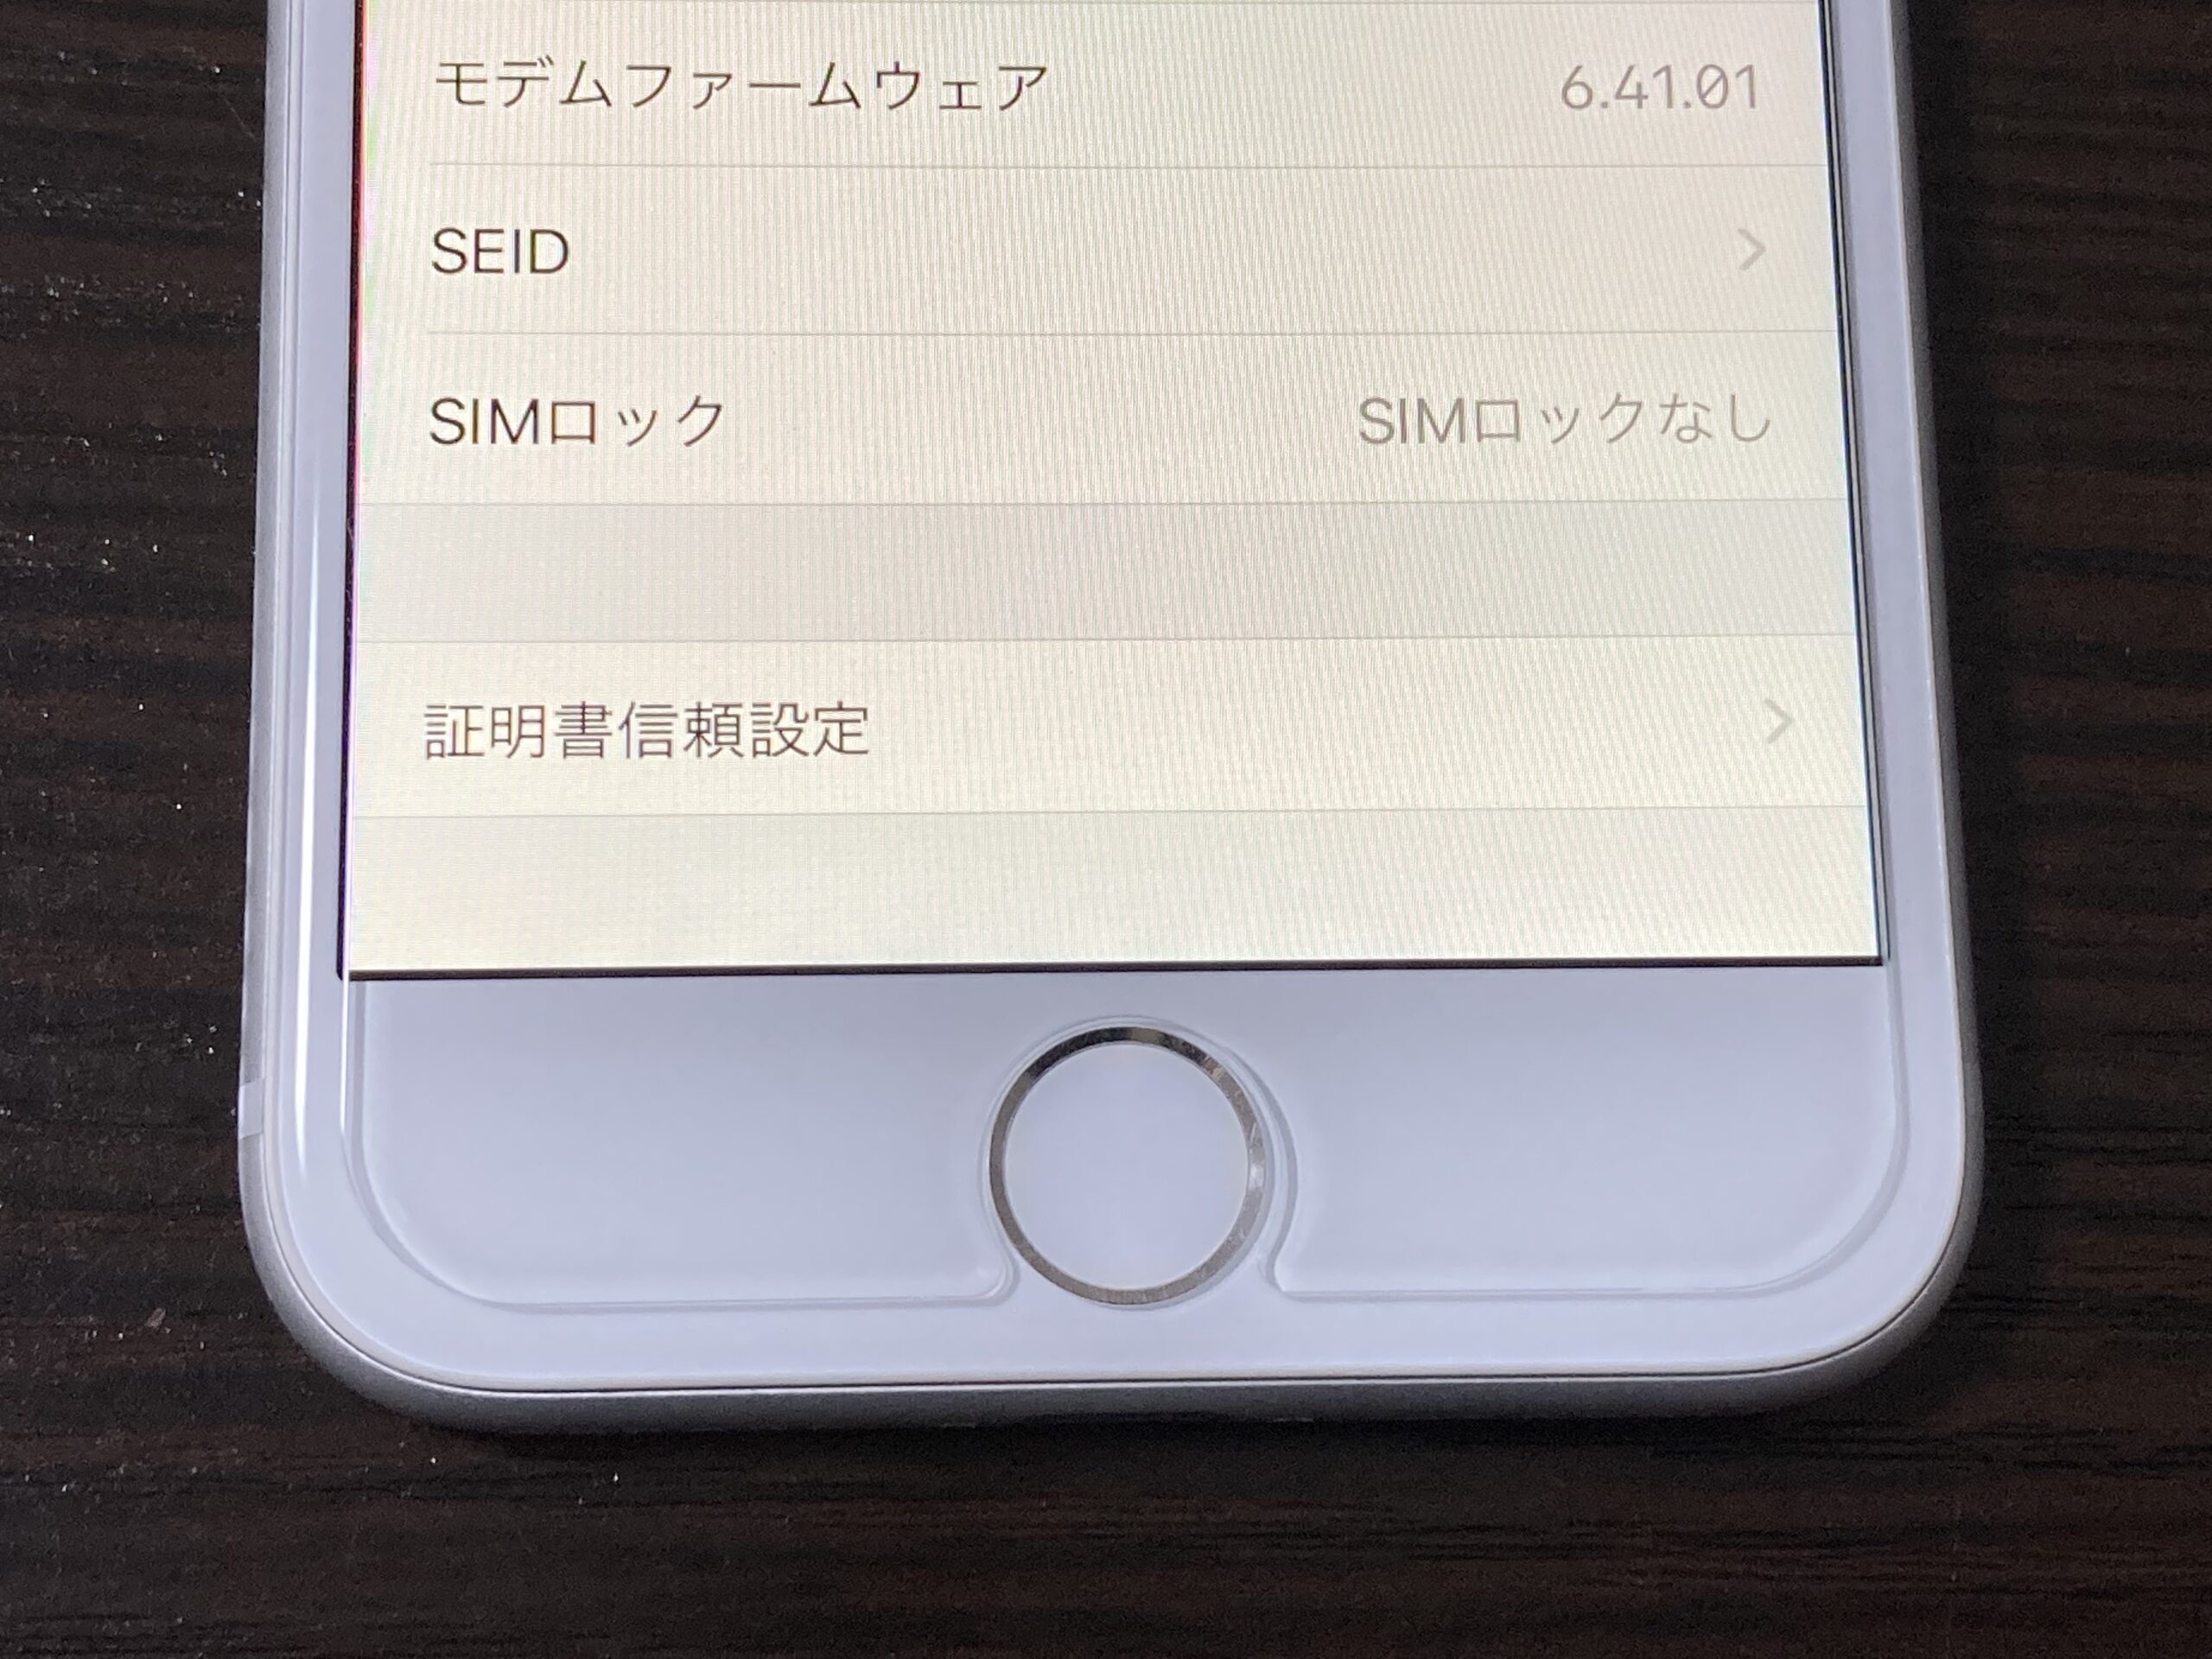 iPhone8 64GB SIMフリー シルバー | iTerminal